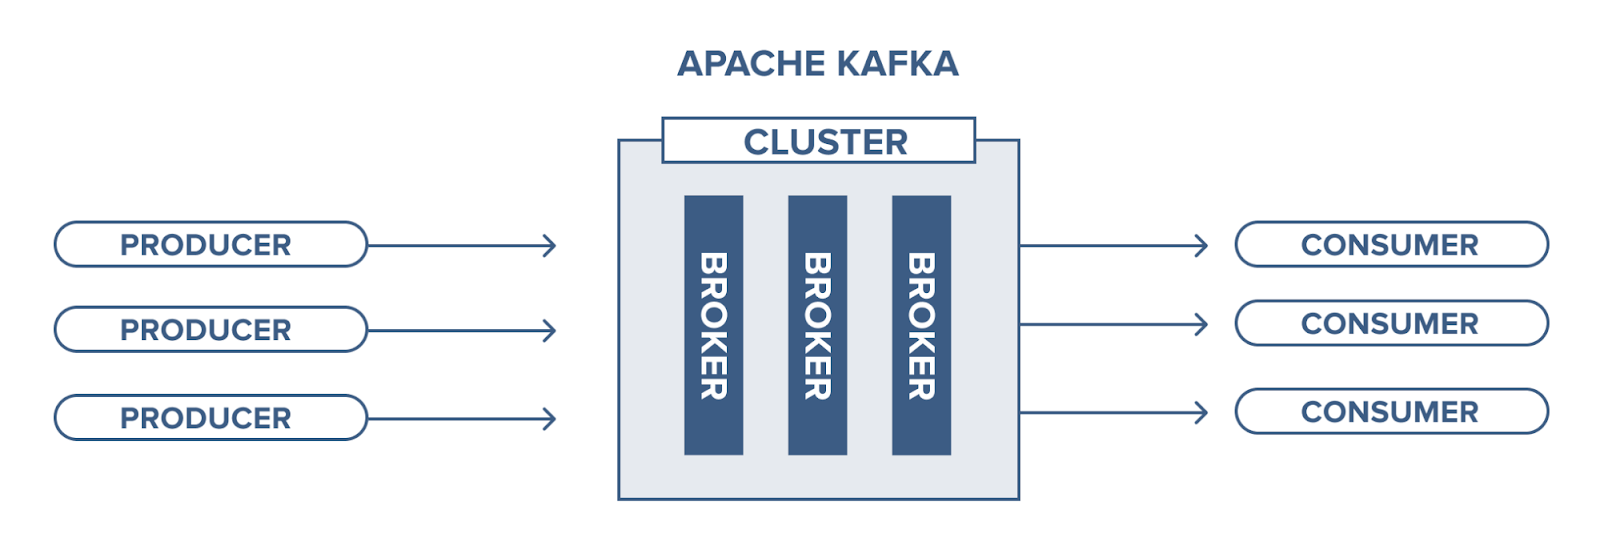 Kafka producers | Apache Kafka Architecture